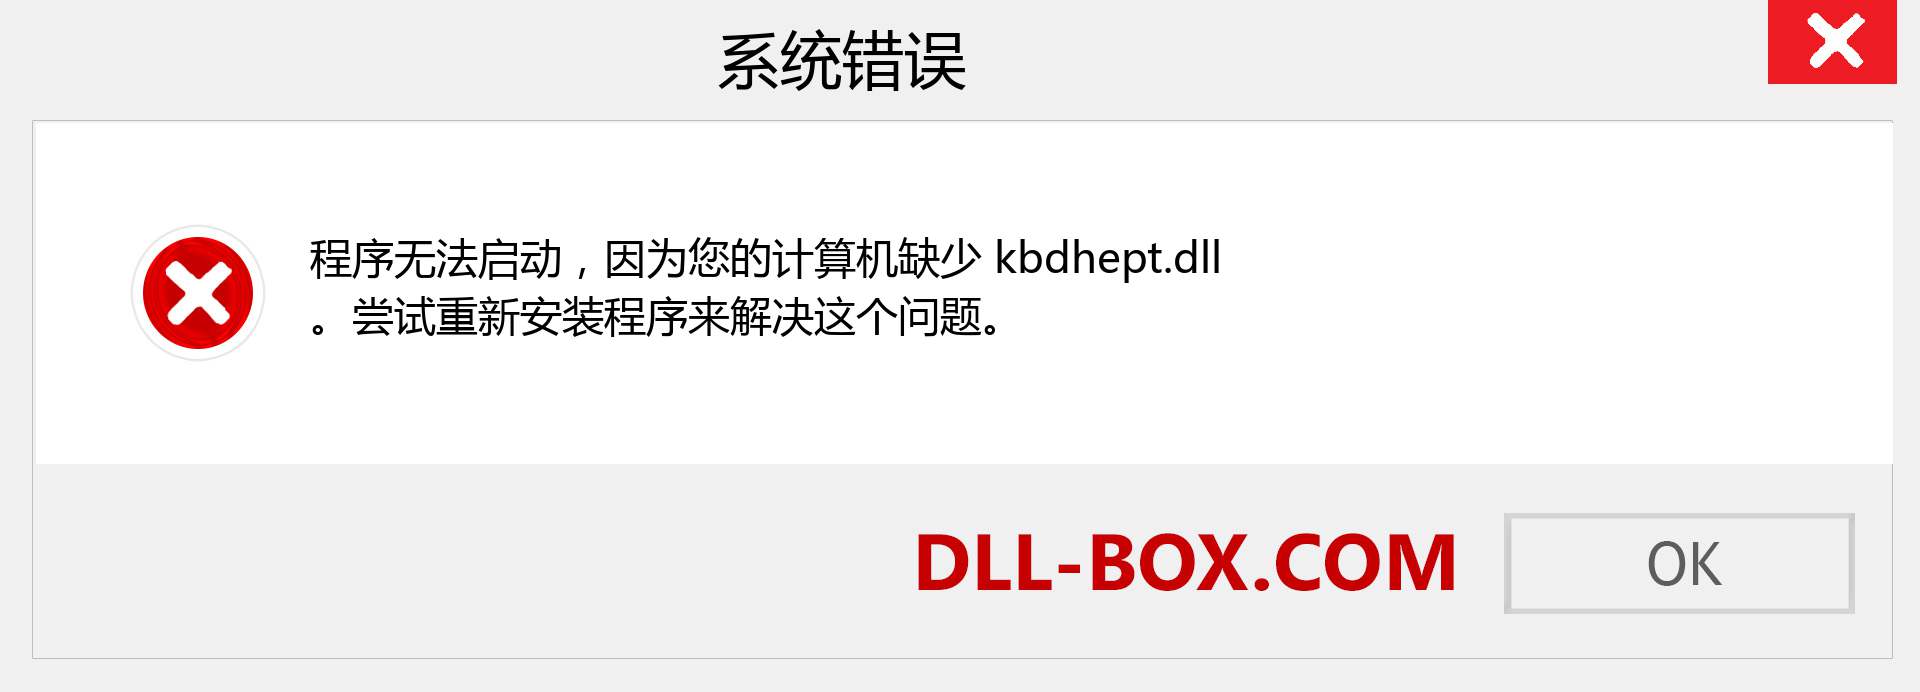 kbdhept.dll 文件丢失？。 适用于 Windows 7、8、10 的下载 - 修复 Windows、照片、图像上的 kbdhept dll 丢失错误